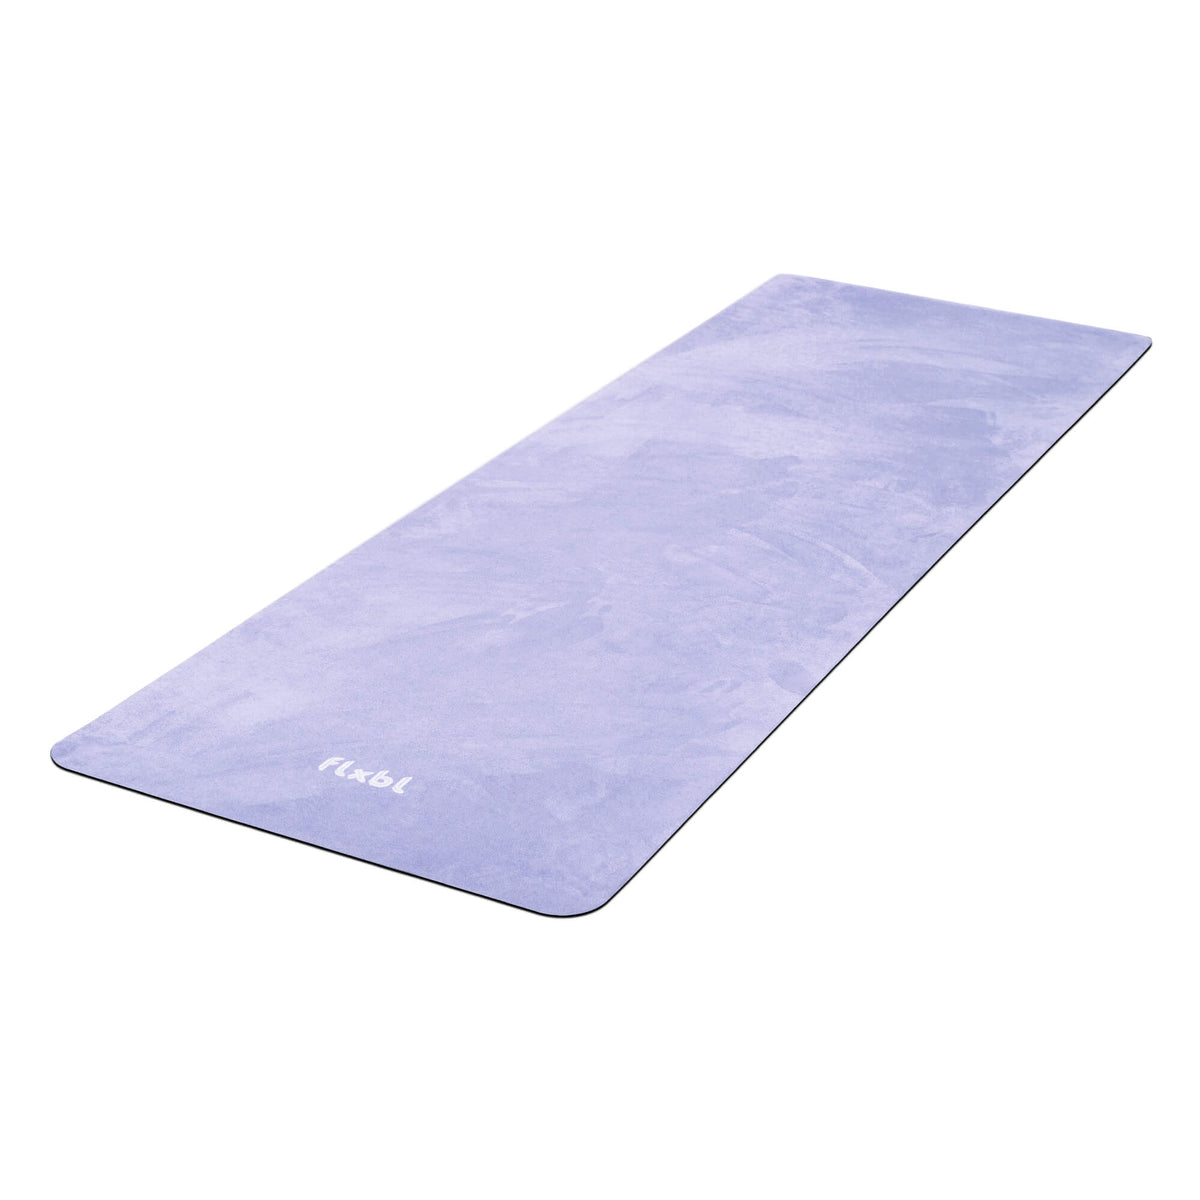 YOGA DESIGN LAB | The Travel Yoga Mat 1.5mm | All-in-ONE Mat & Towel |  Ideal for Hot Yoga, Power, Bikram, Ashtanga, Sweat | Lightweight, Foldable,  Eco